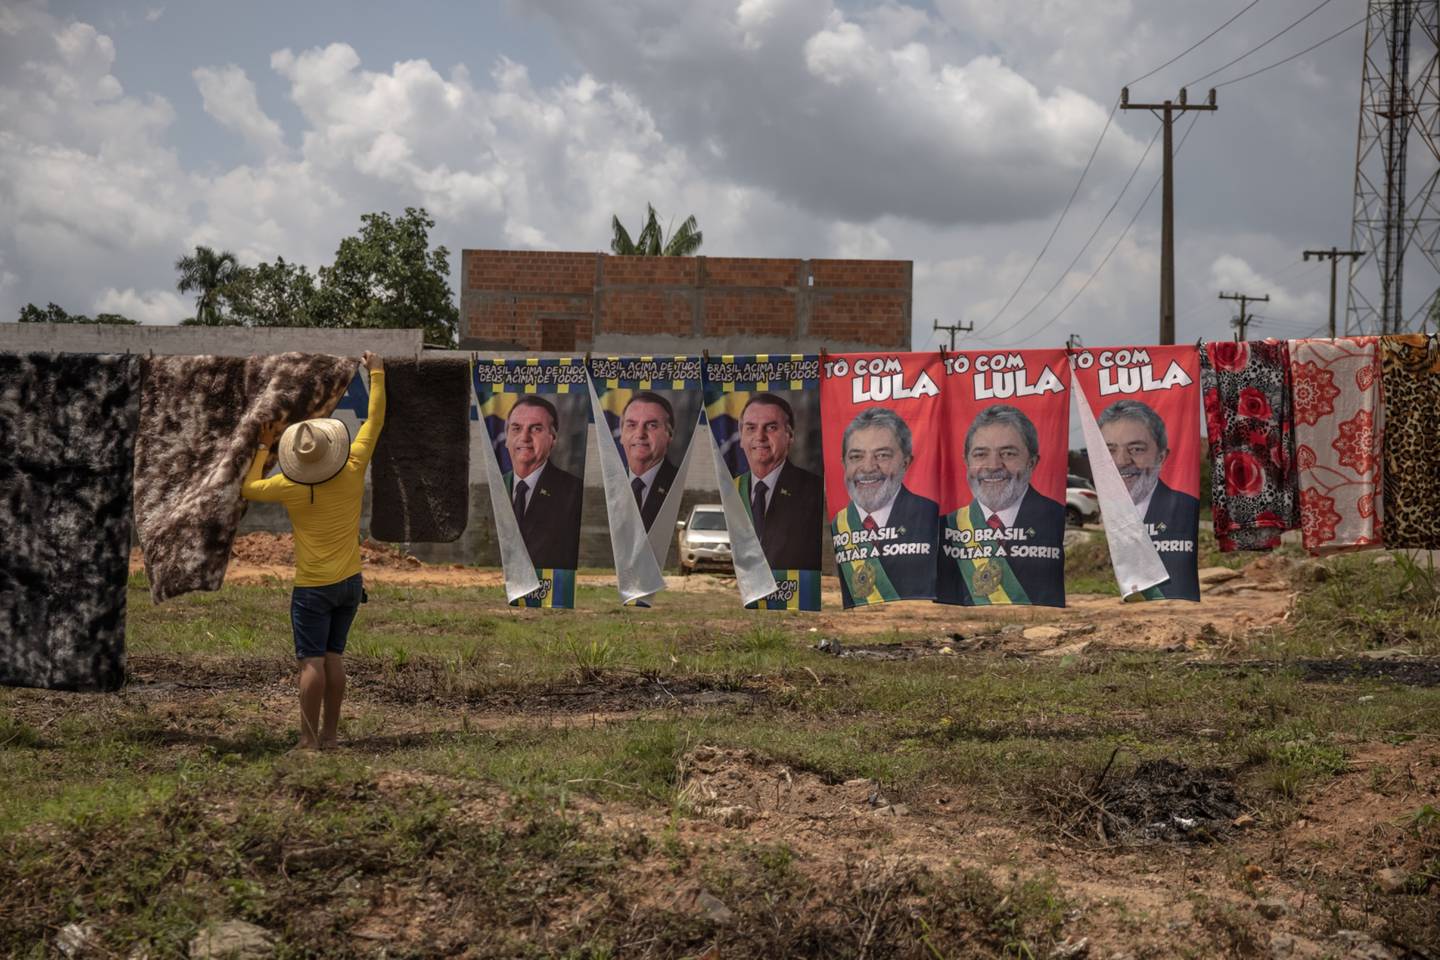 A street vendor sells towels with images of Jair Bolsonaro, Brazil's president, and Luiz Inacio Lula da Silva, Brazil's former president, near Eldorado dos Carajas, Para state.